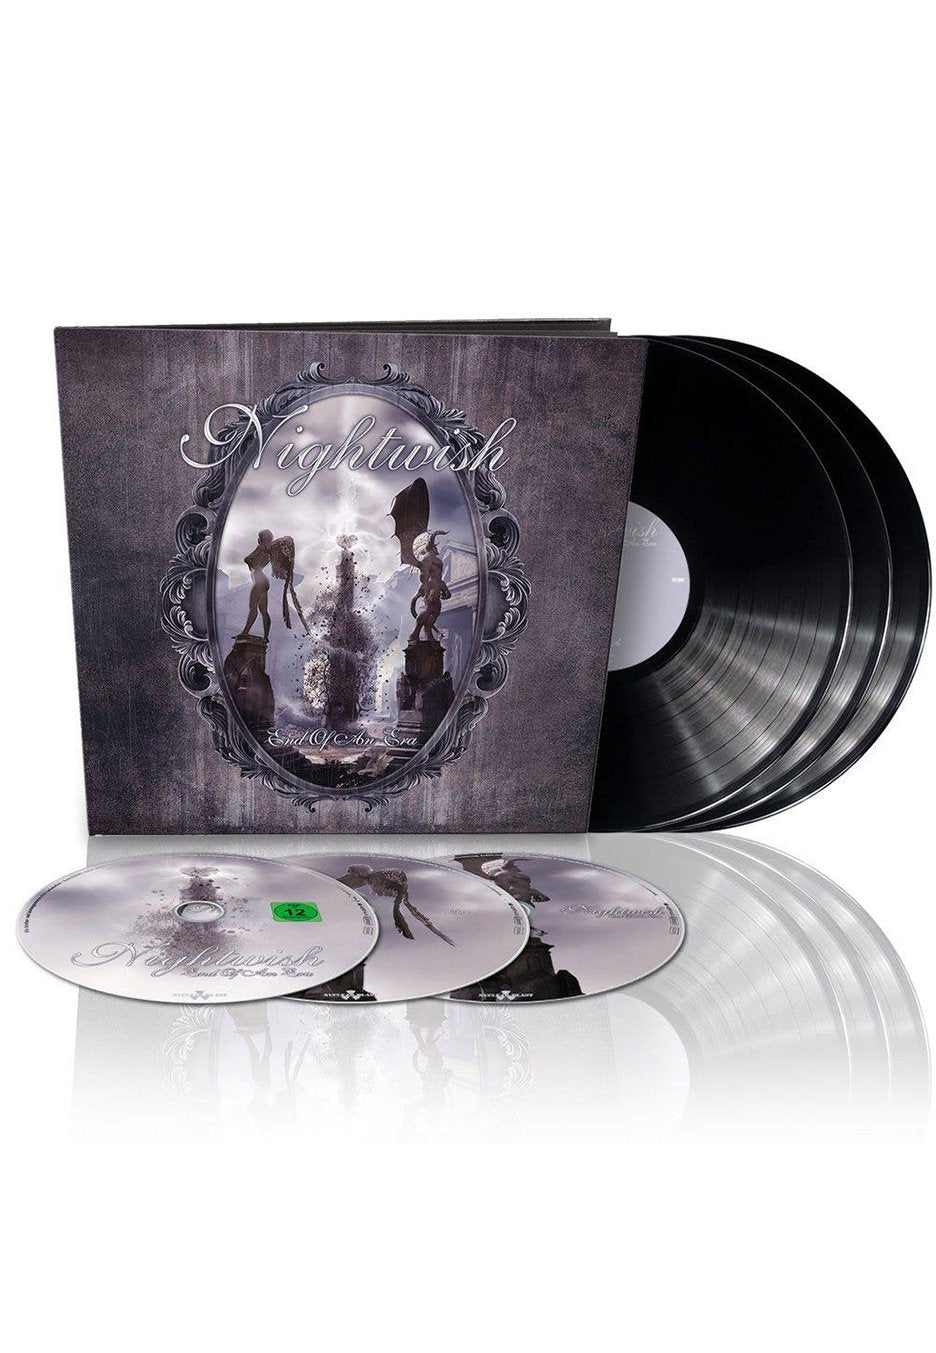 Nightwish - End Of An Era Re-Release - Earbook